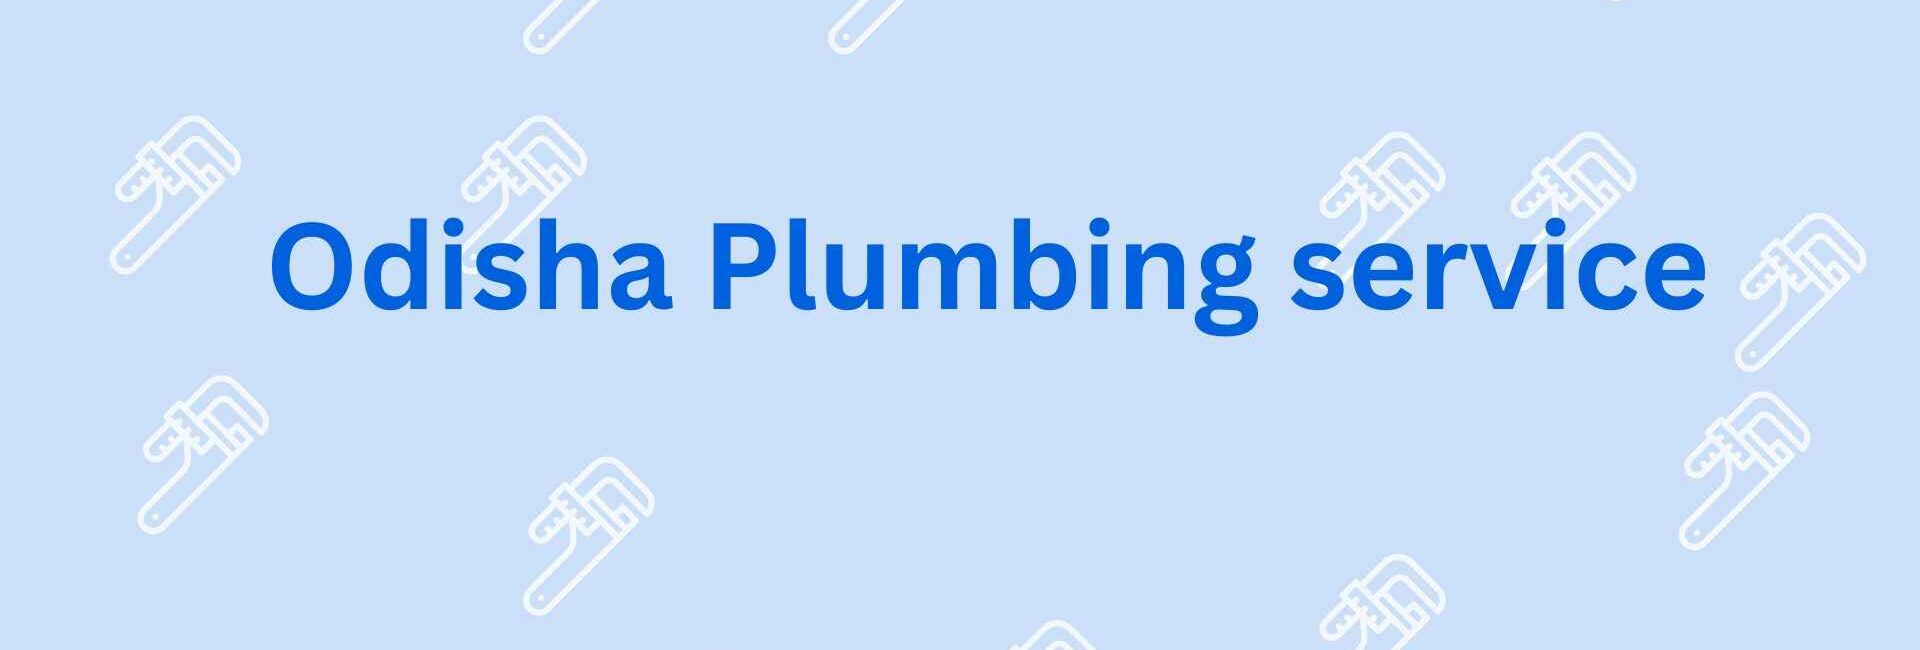 Odisha Plumbing service - Plumber Service Provider in Noida